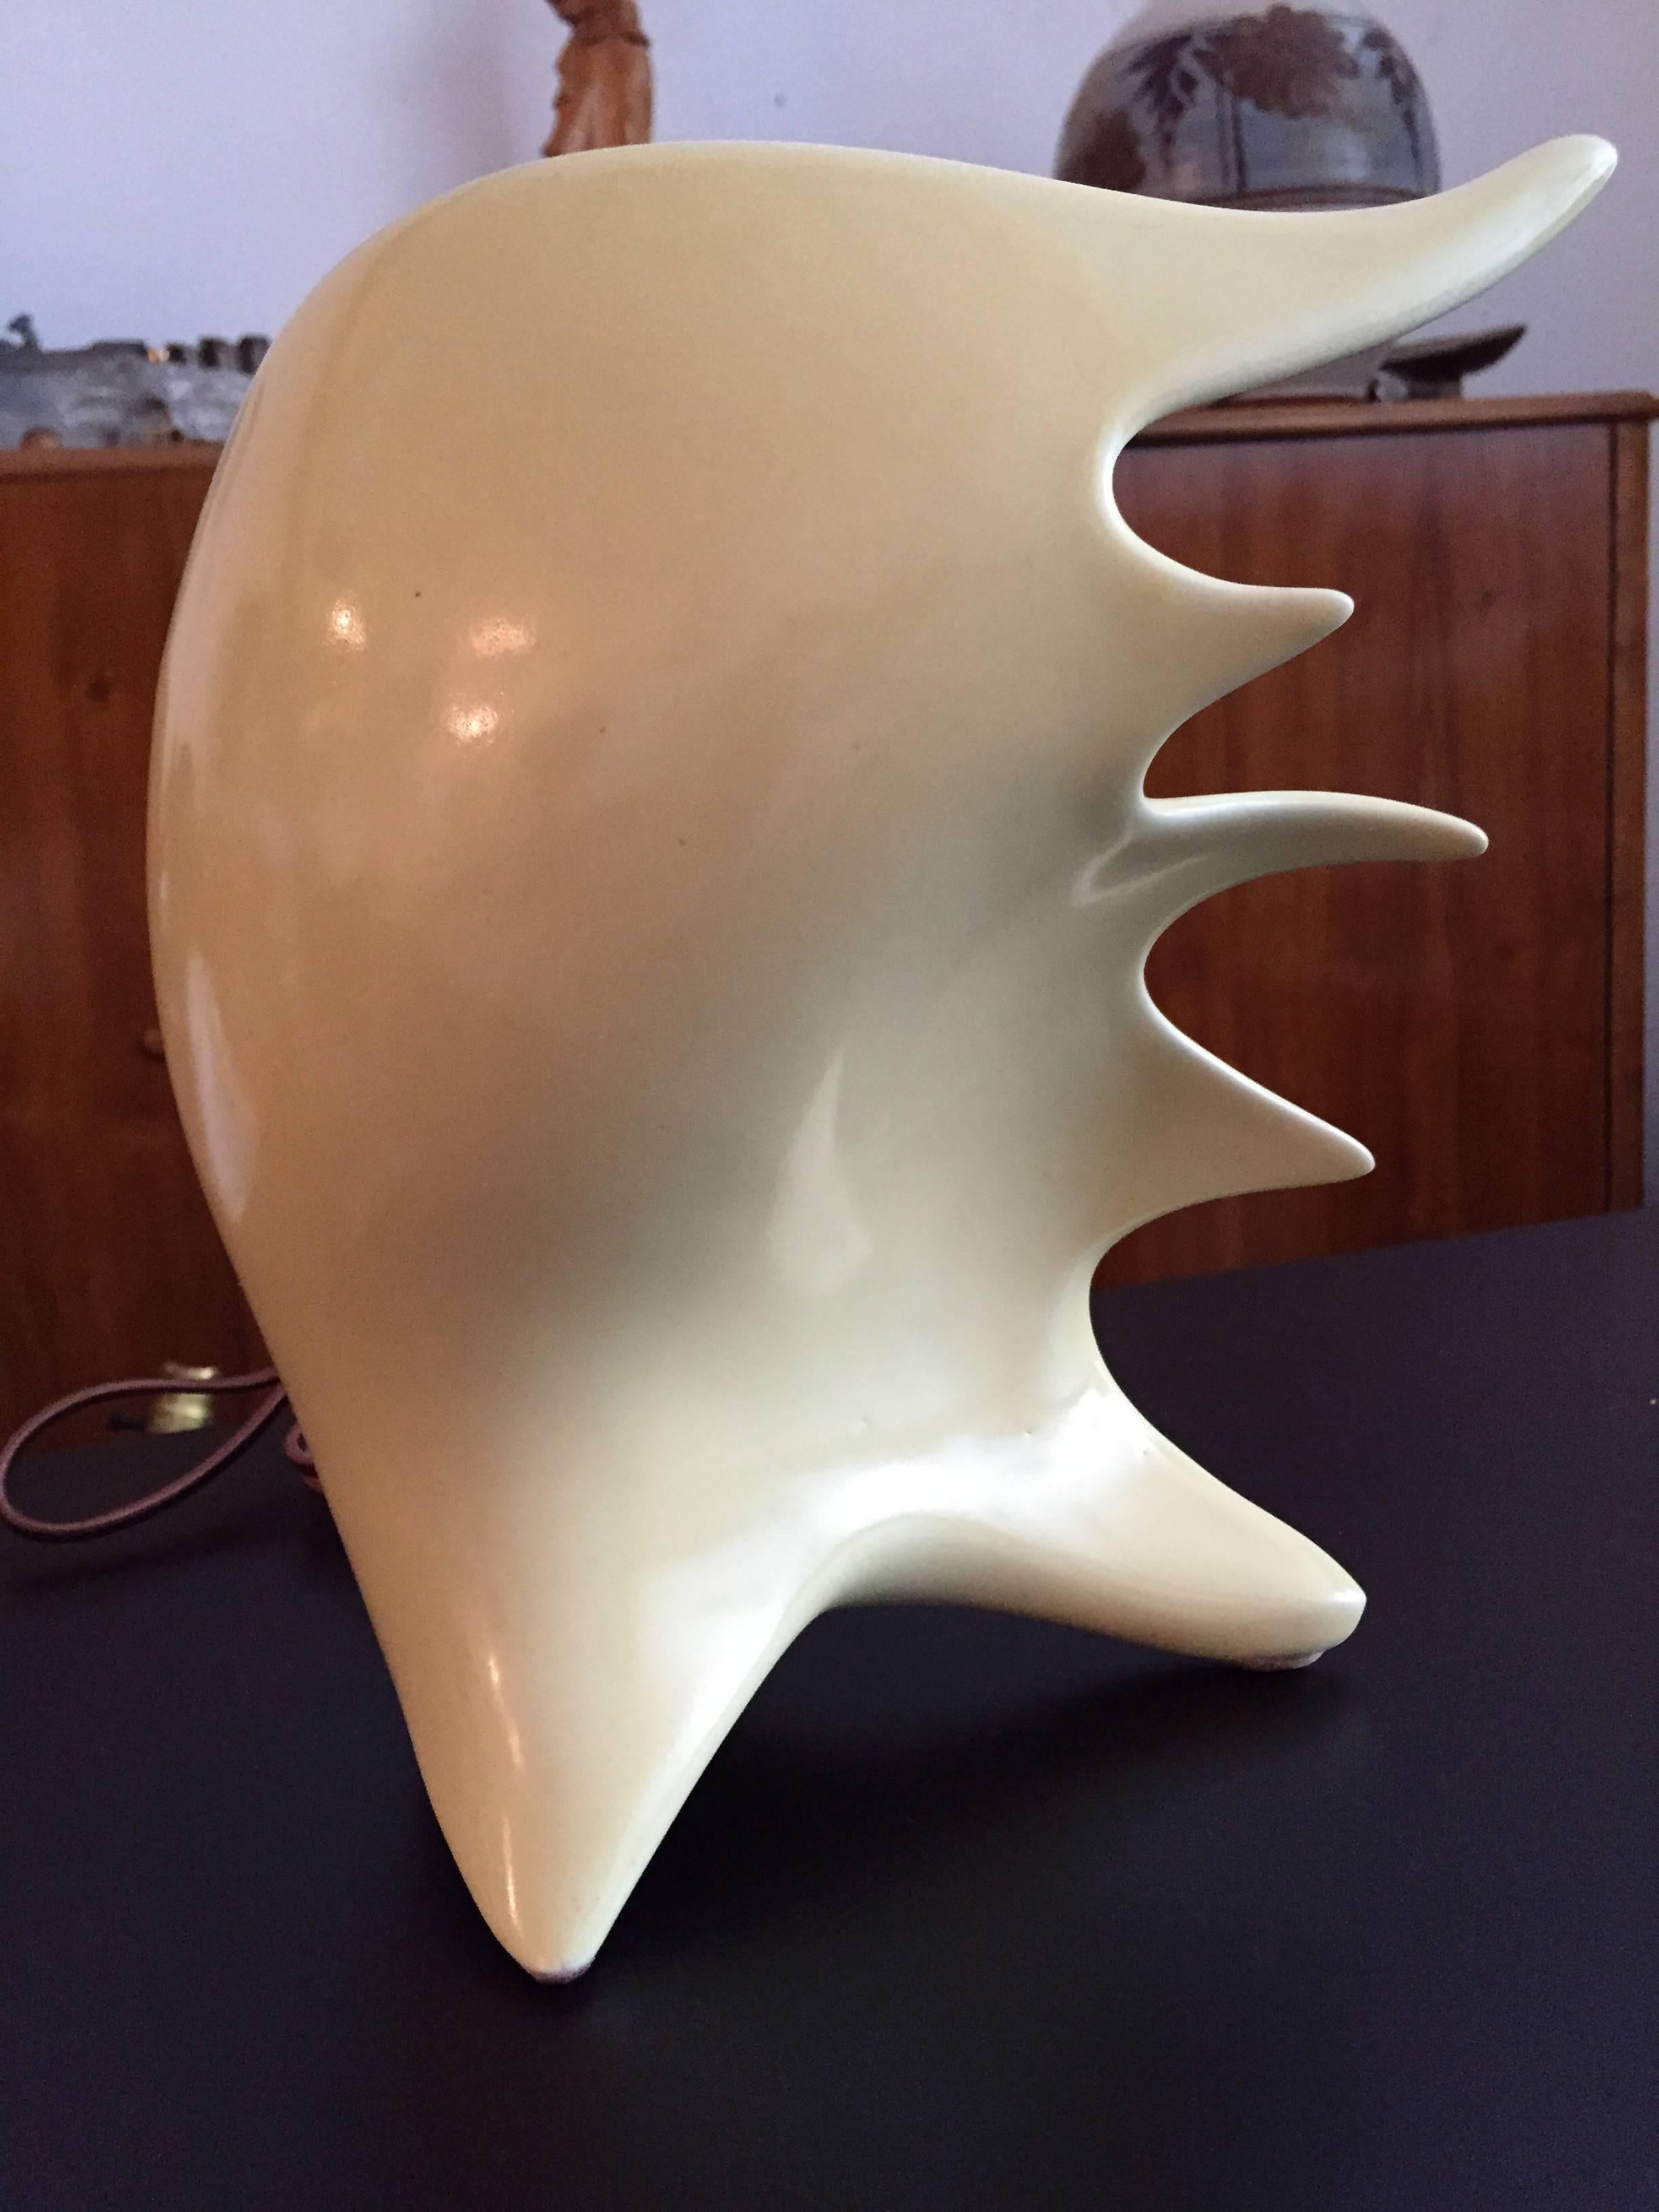 Lampe originale en céramique émaillée Conchiglia des années 1950, en forme de coquille de conque.

Societa Ceramica Italiana di Laveno. Signé.